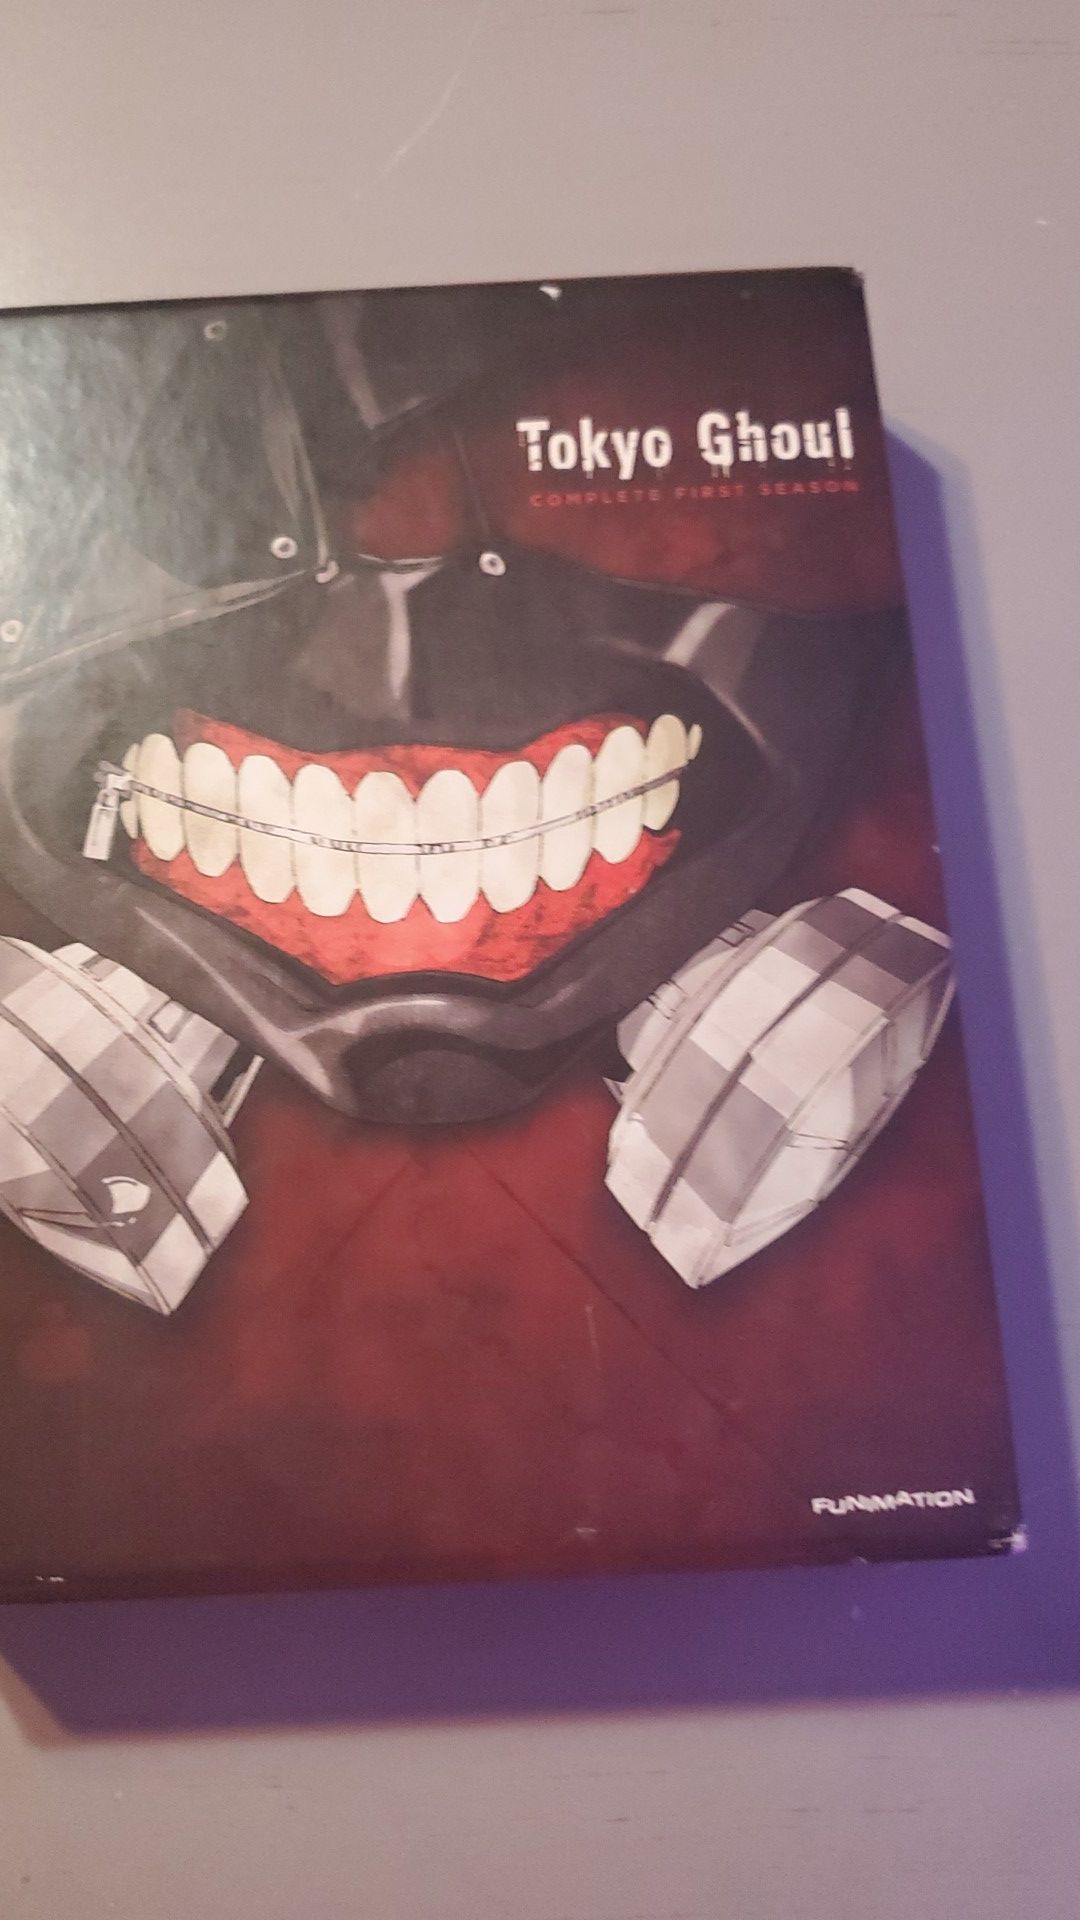 Anime Tokyo ghoul season 1